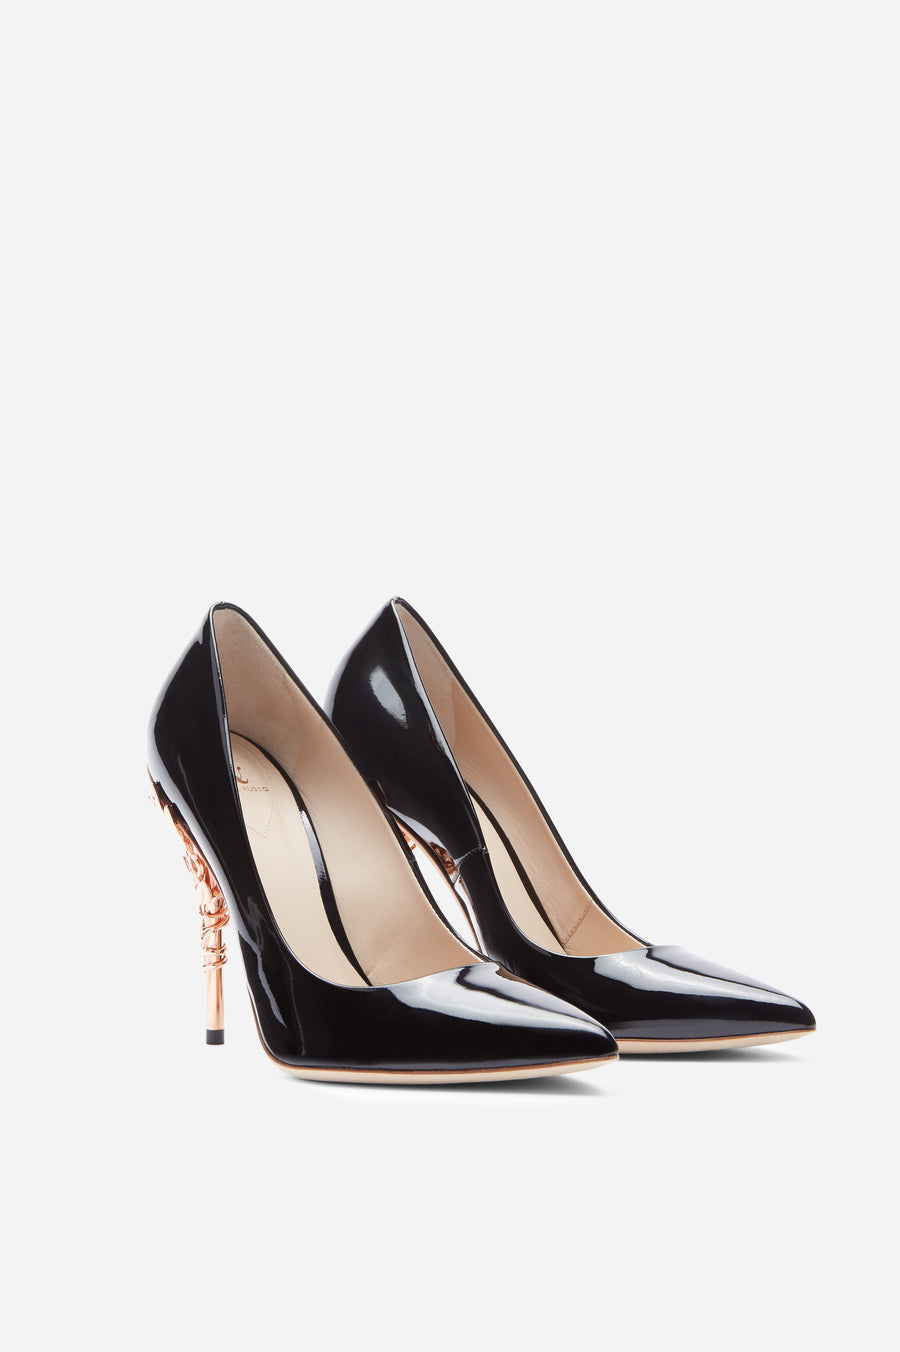 Lulus | Zia Black Patent Pointed-Toe Pumps | Leather heels outfit, Pumps,  Pointed toe pumps